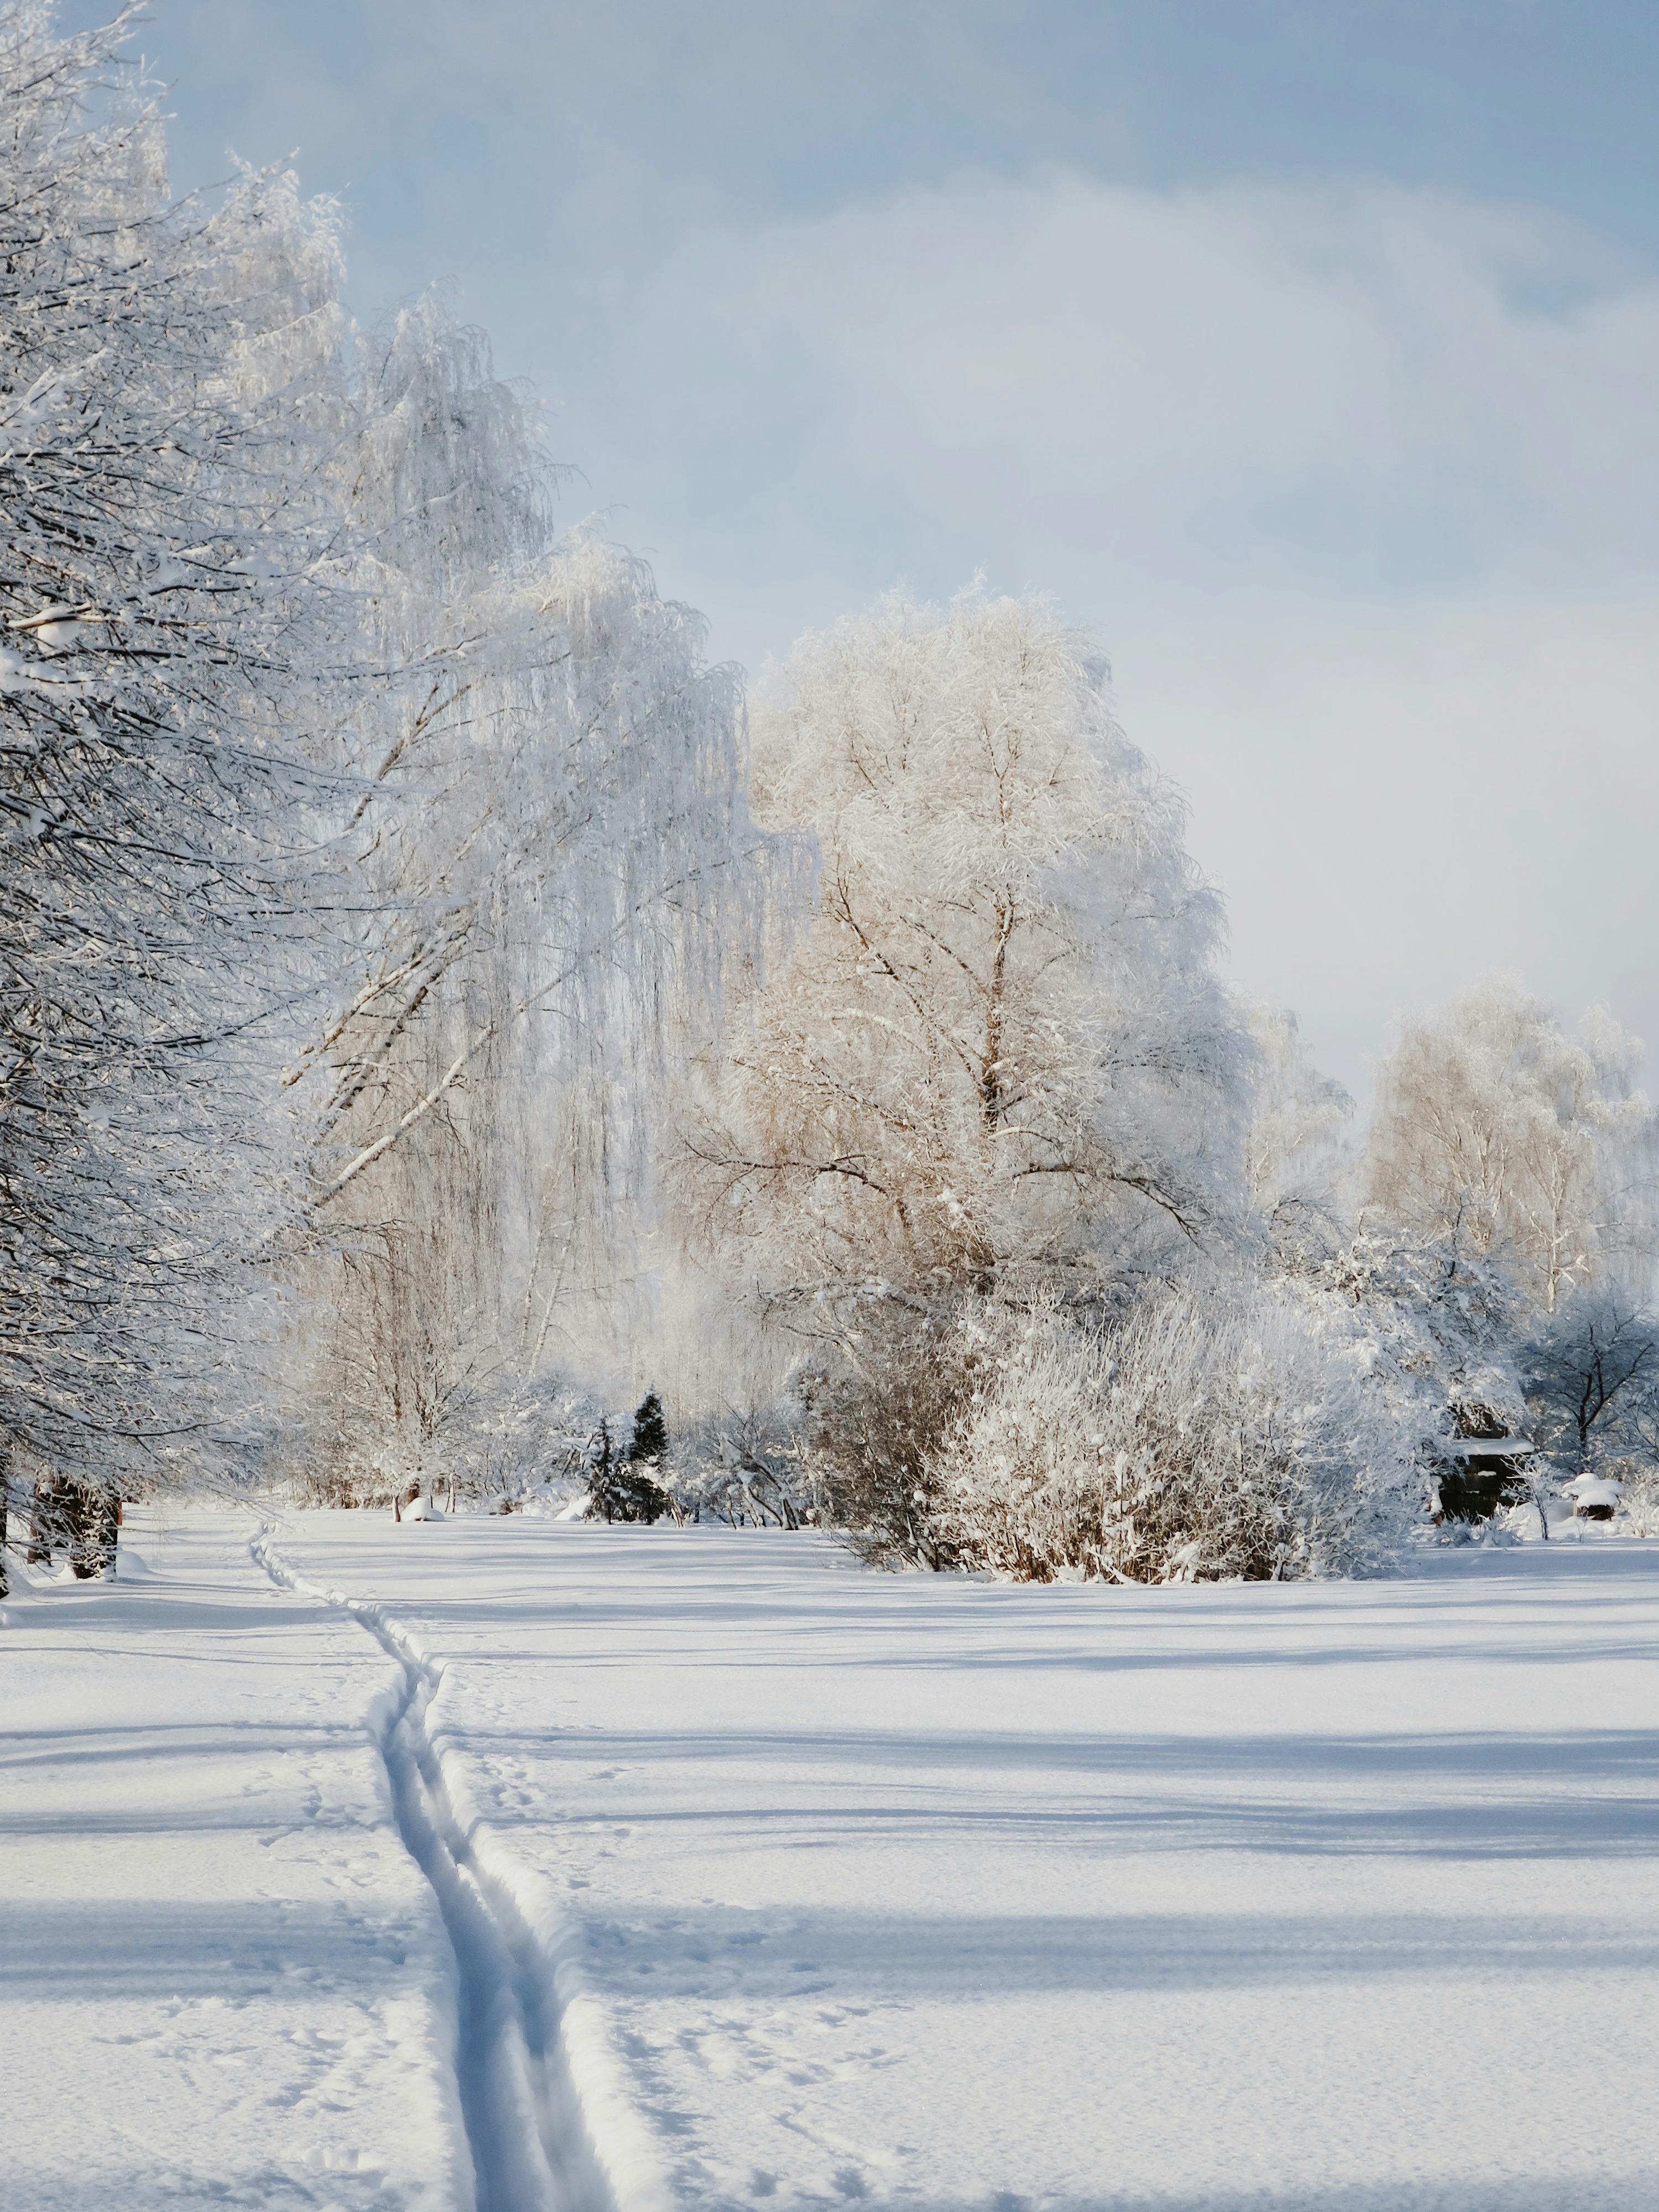 Snowy walkway in park against amazing winter scenery · Free Stock Photo